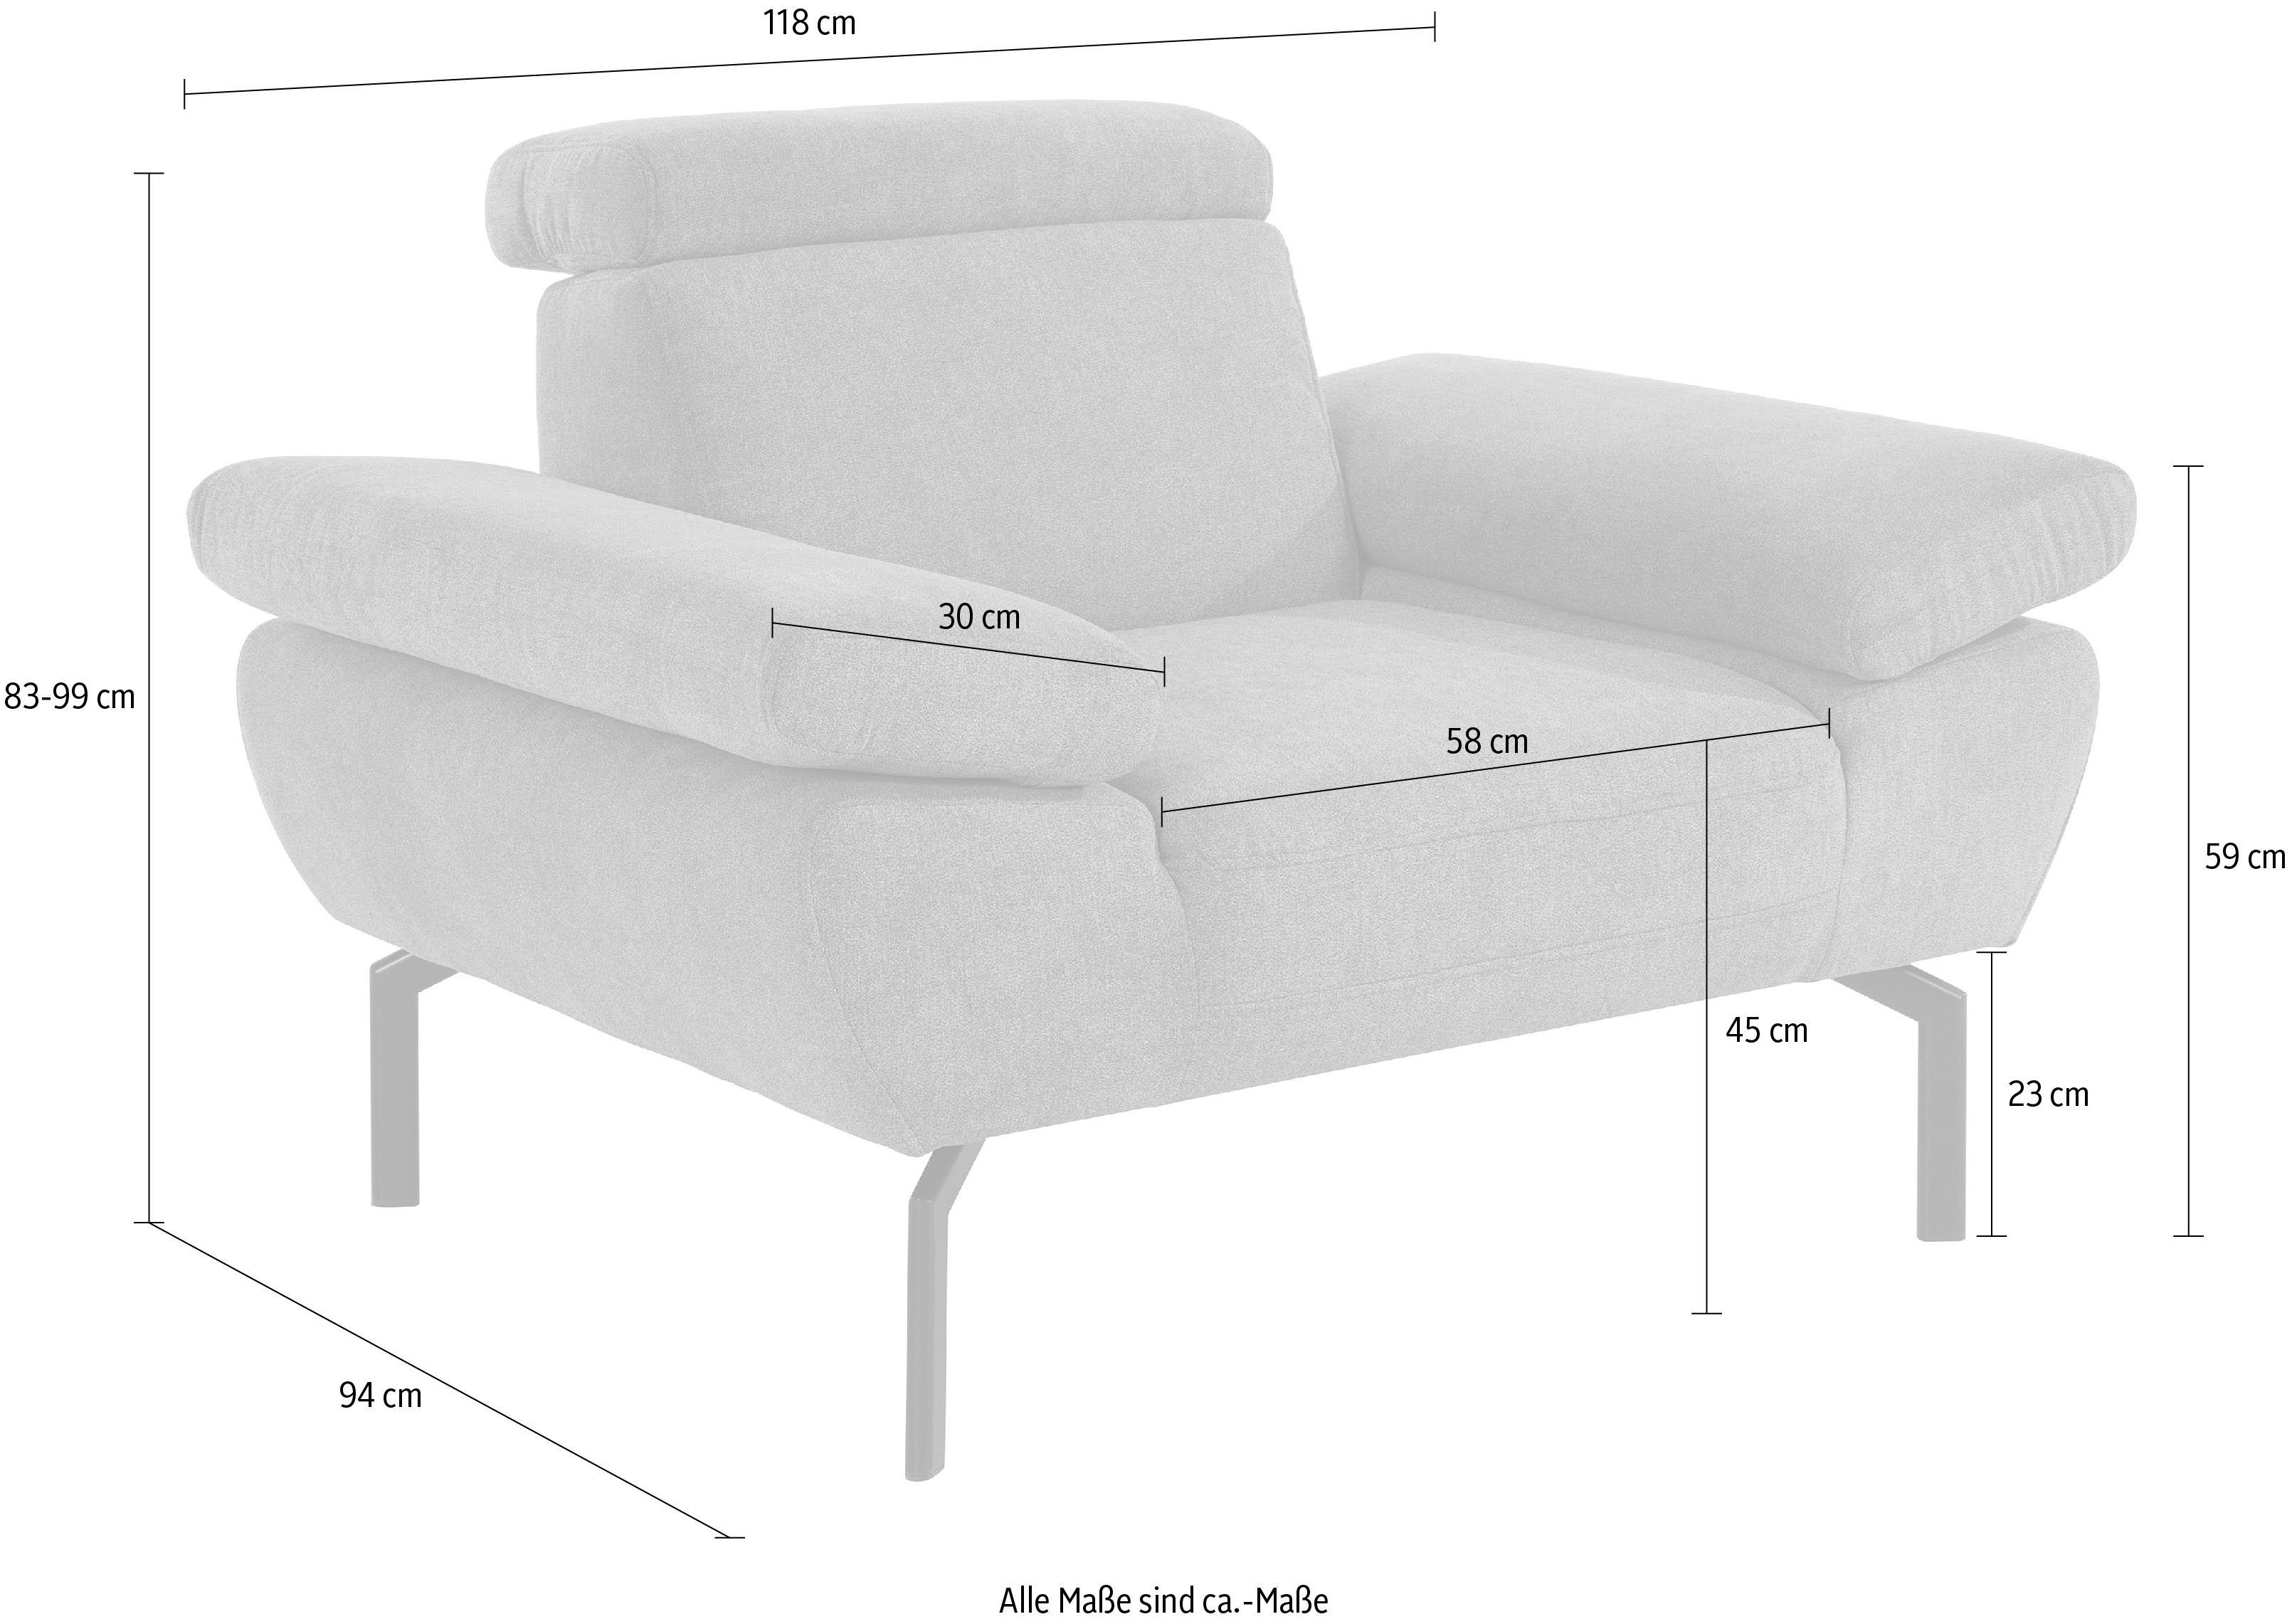 Places Luxus-Microfaser Sessel Luxus, of Rückenverstellung, Style Lederoptik Trapino wahlweise mit in